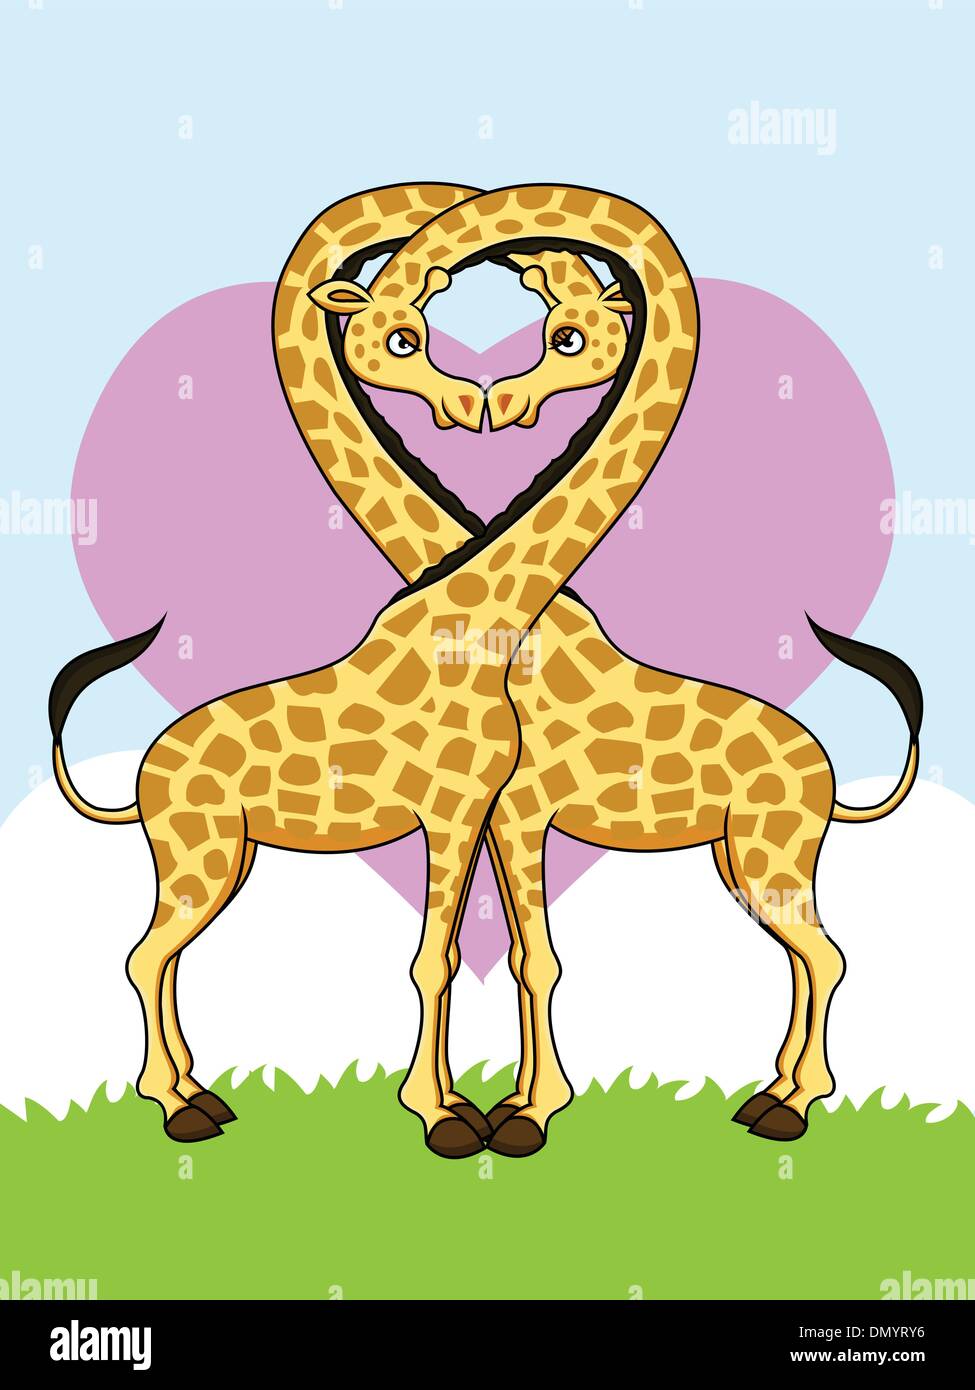 Two funny giraffes in love Stock Vector